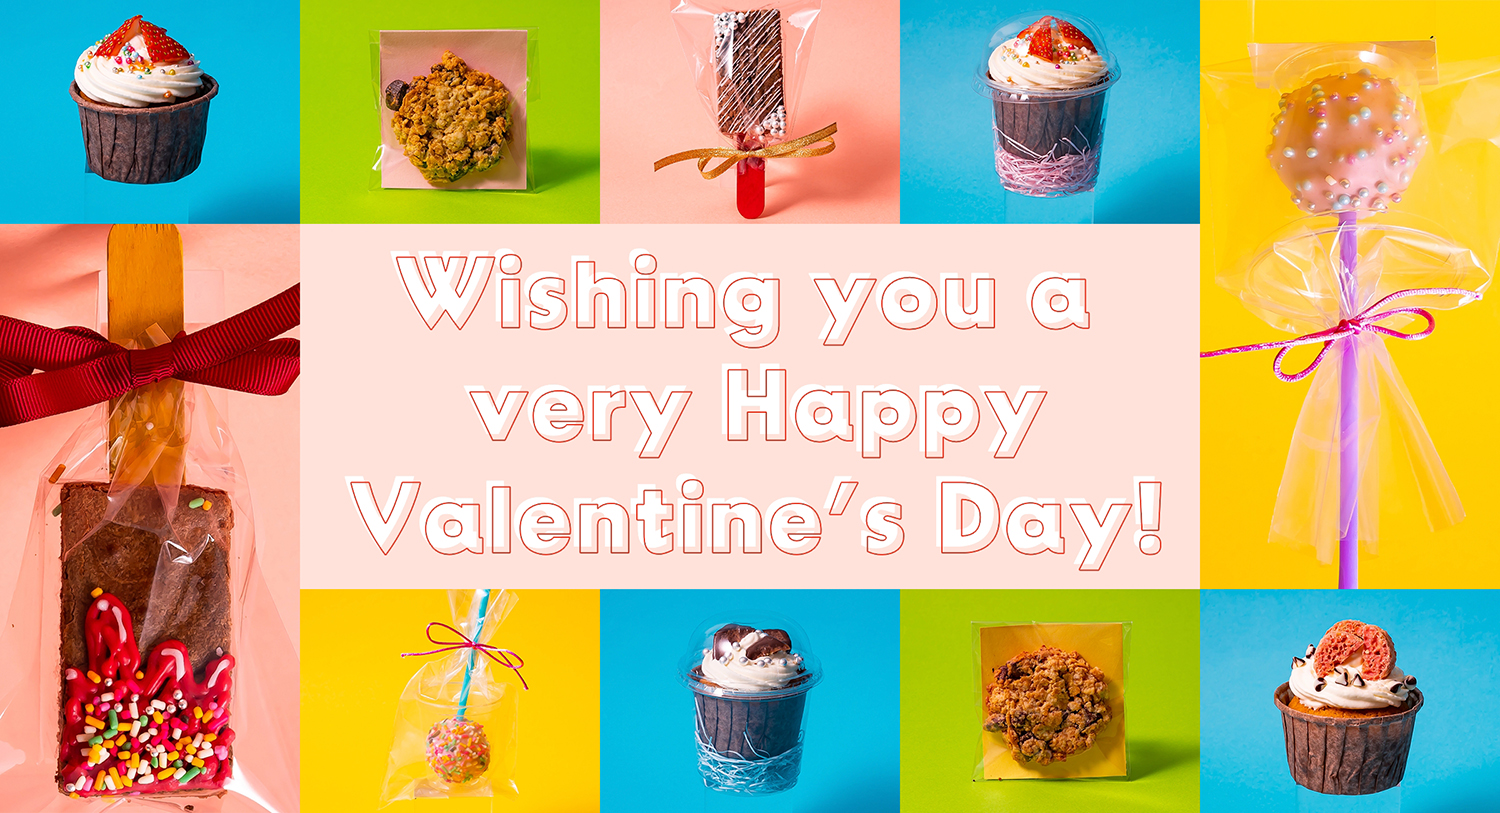 Wishing you a very Happy Valentine's Day!